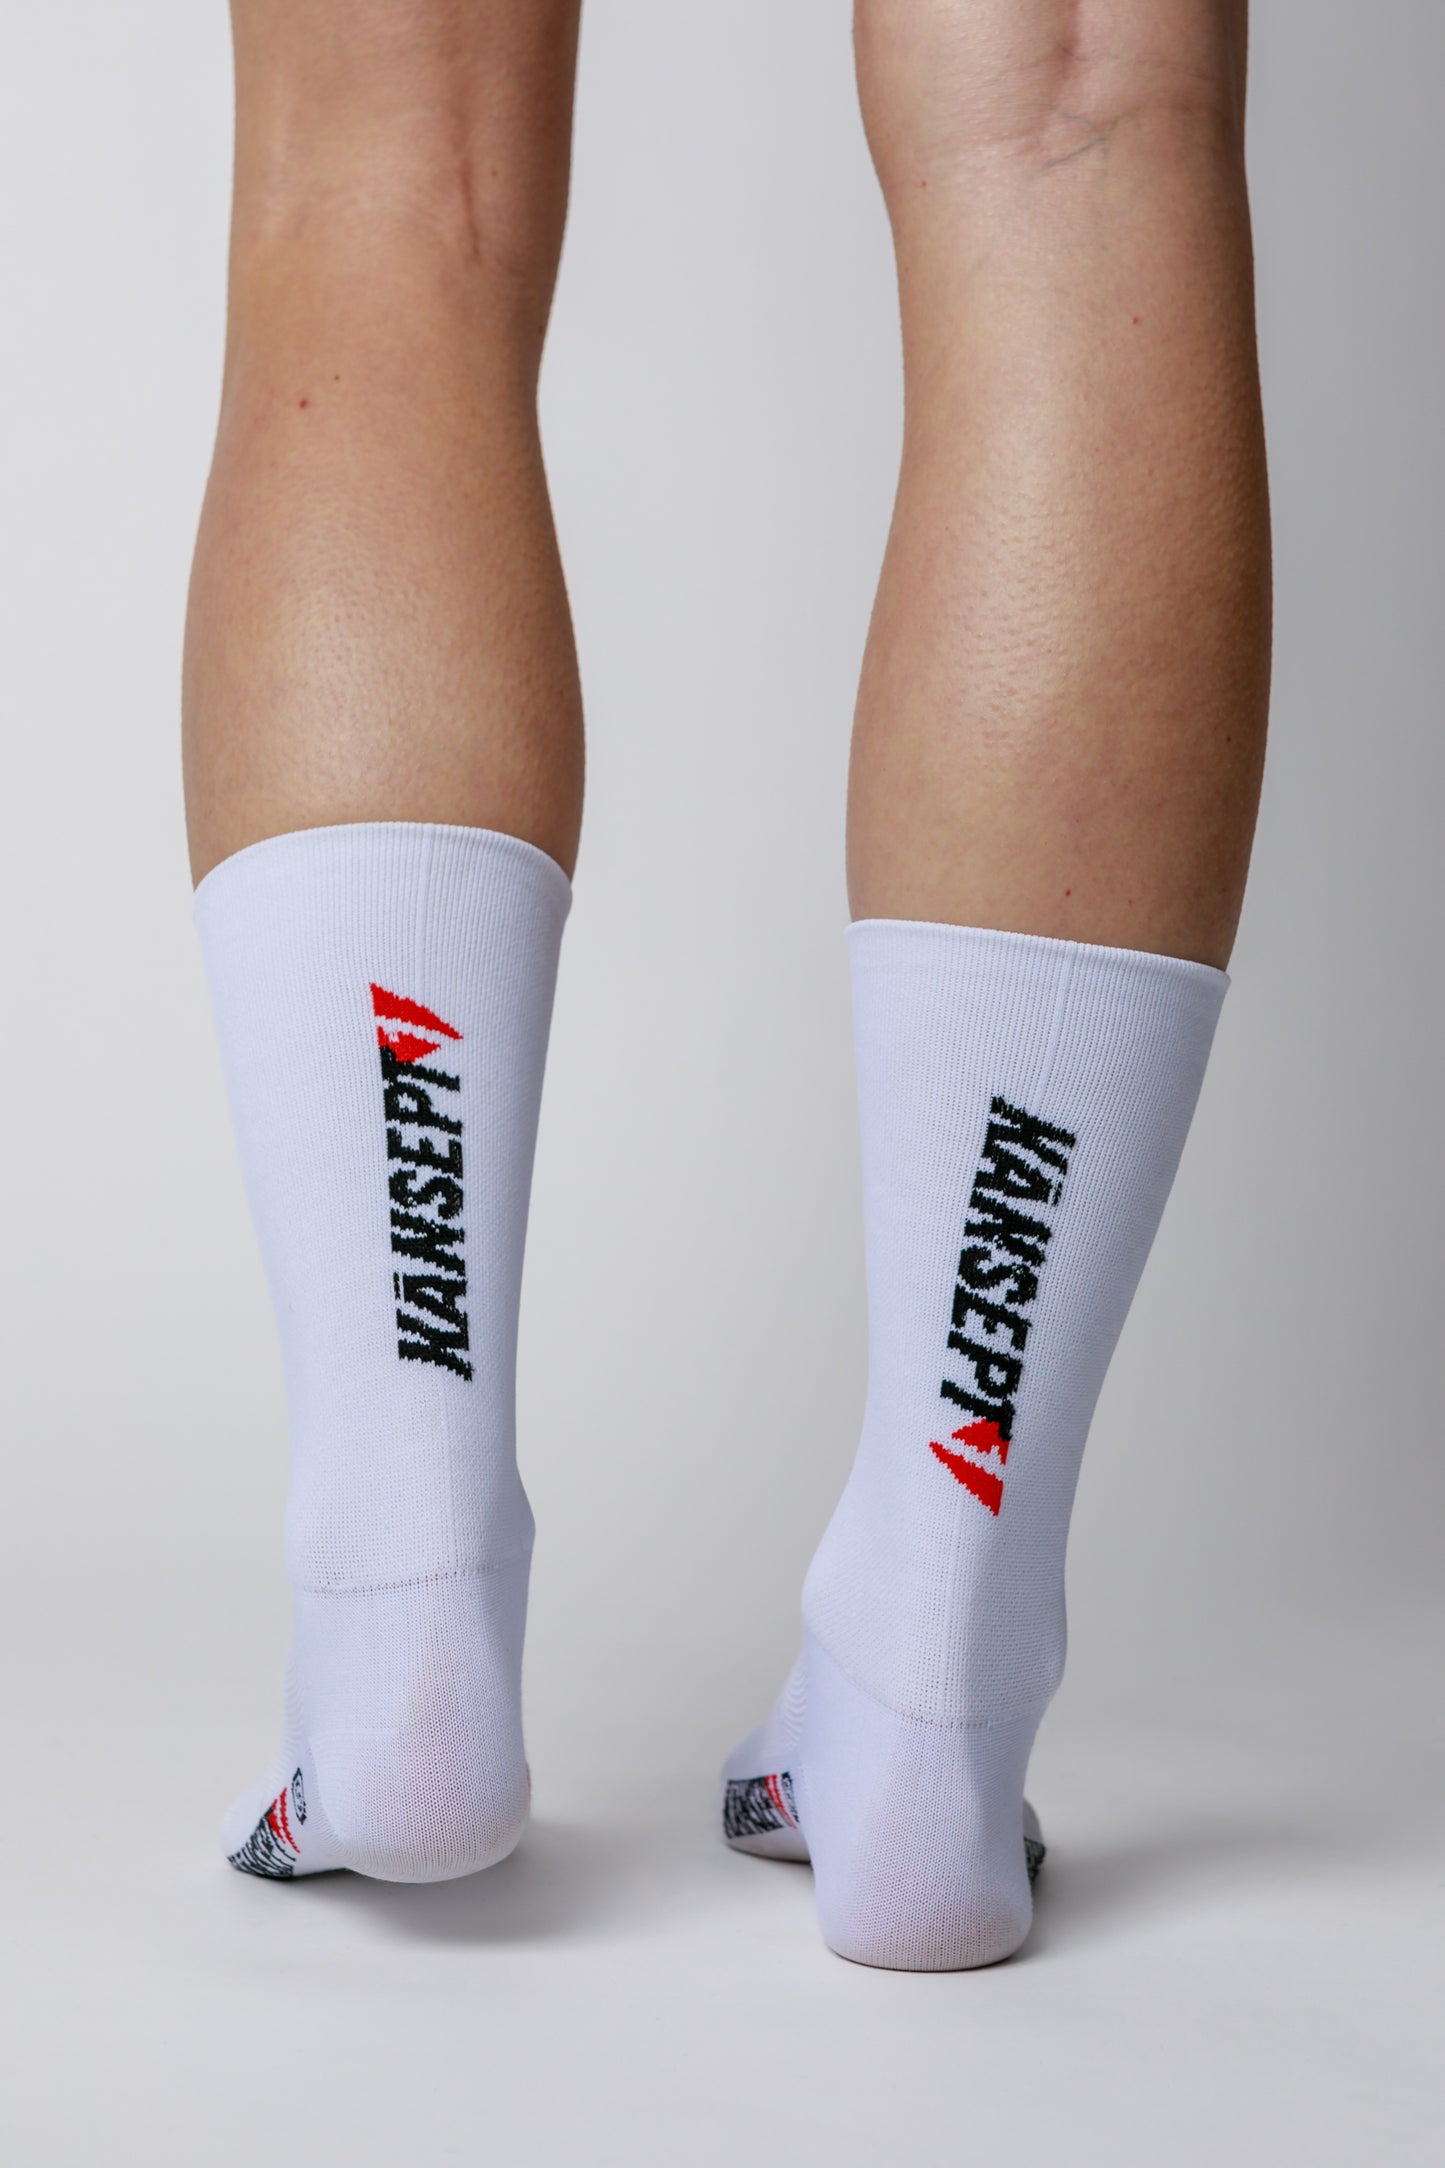 2 PACK ProSpec Rouleur Sock | Team Issue B+W | 2 pack bundle*